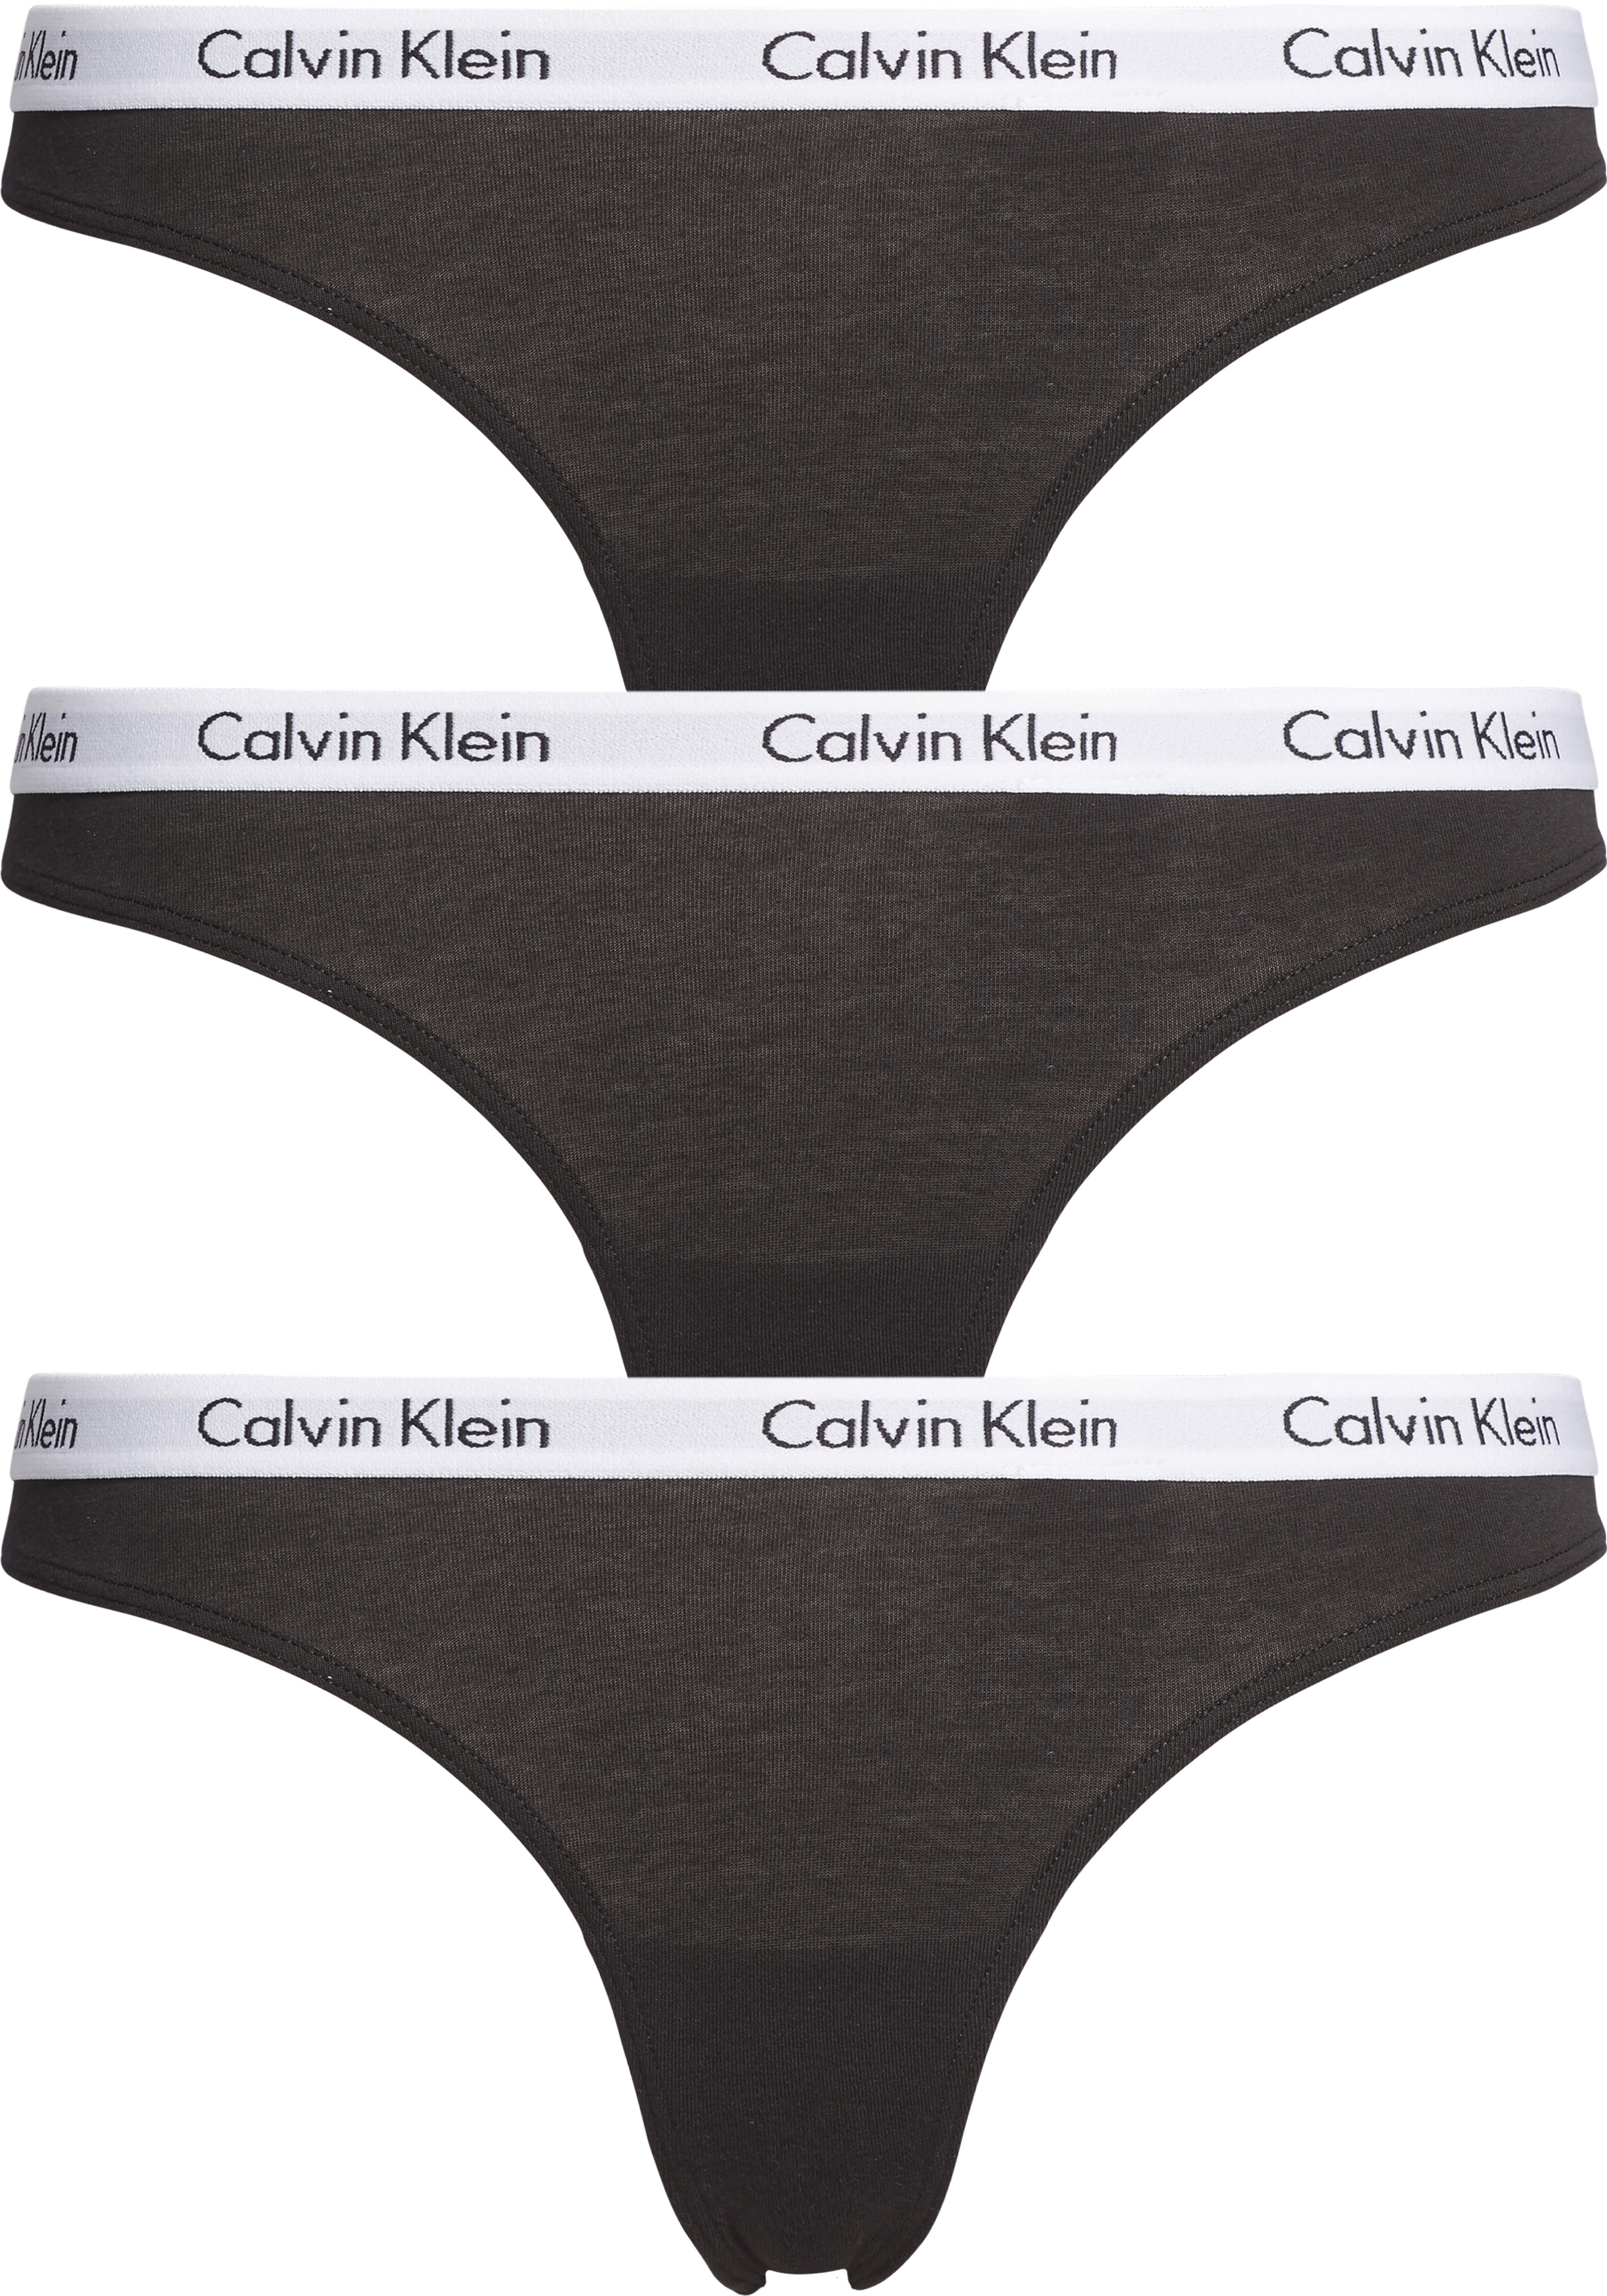 Werkloos Huisje visie Calvin Klein dames strings (3-pack), zwart - Shop de nieuwste voorjaarsmode